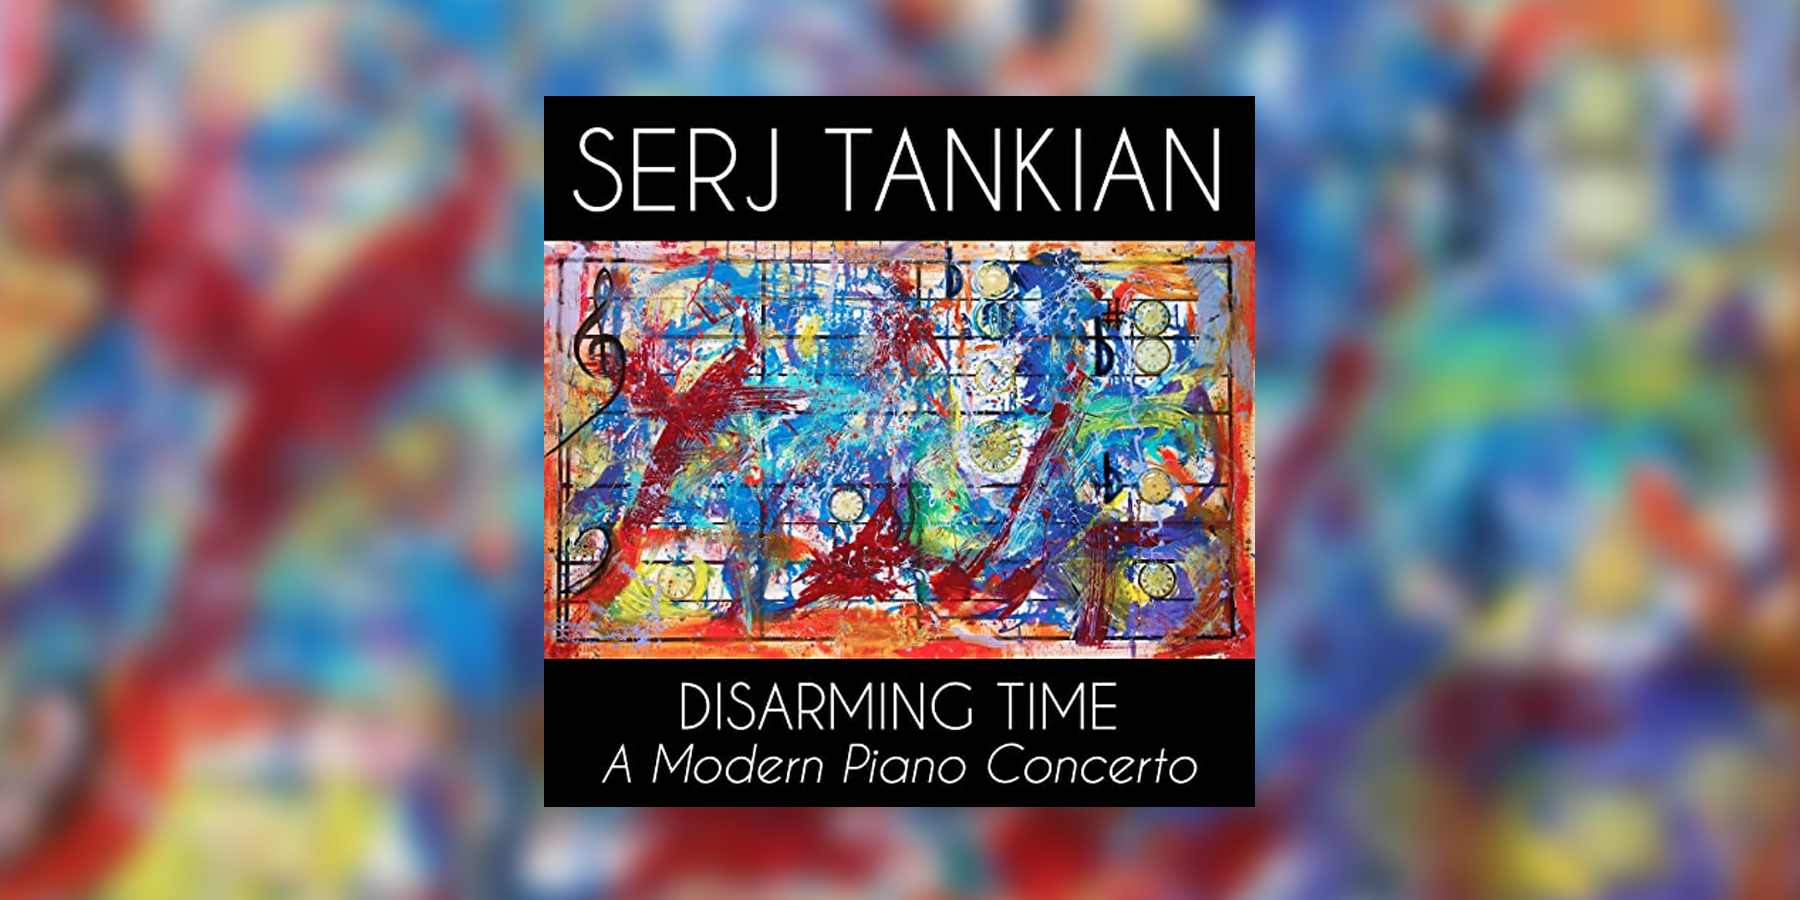 Hear Serj Tankian’s 24-Minute Piano Concerto ‘Disarming Time’